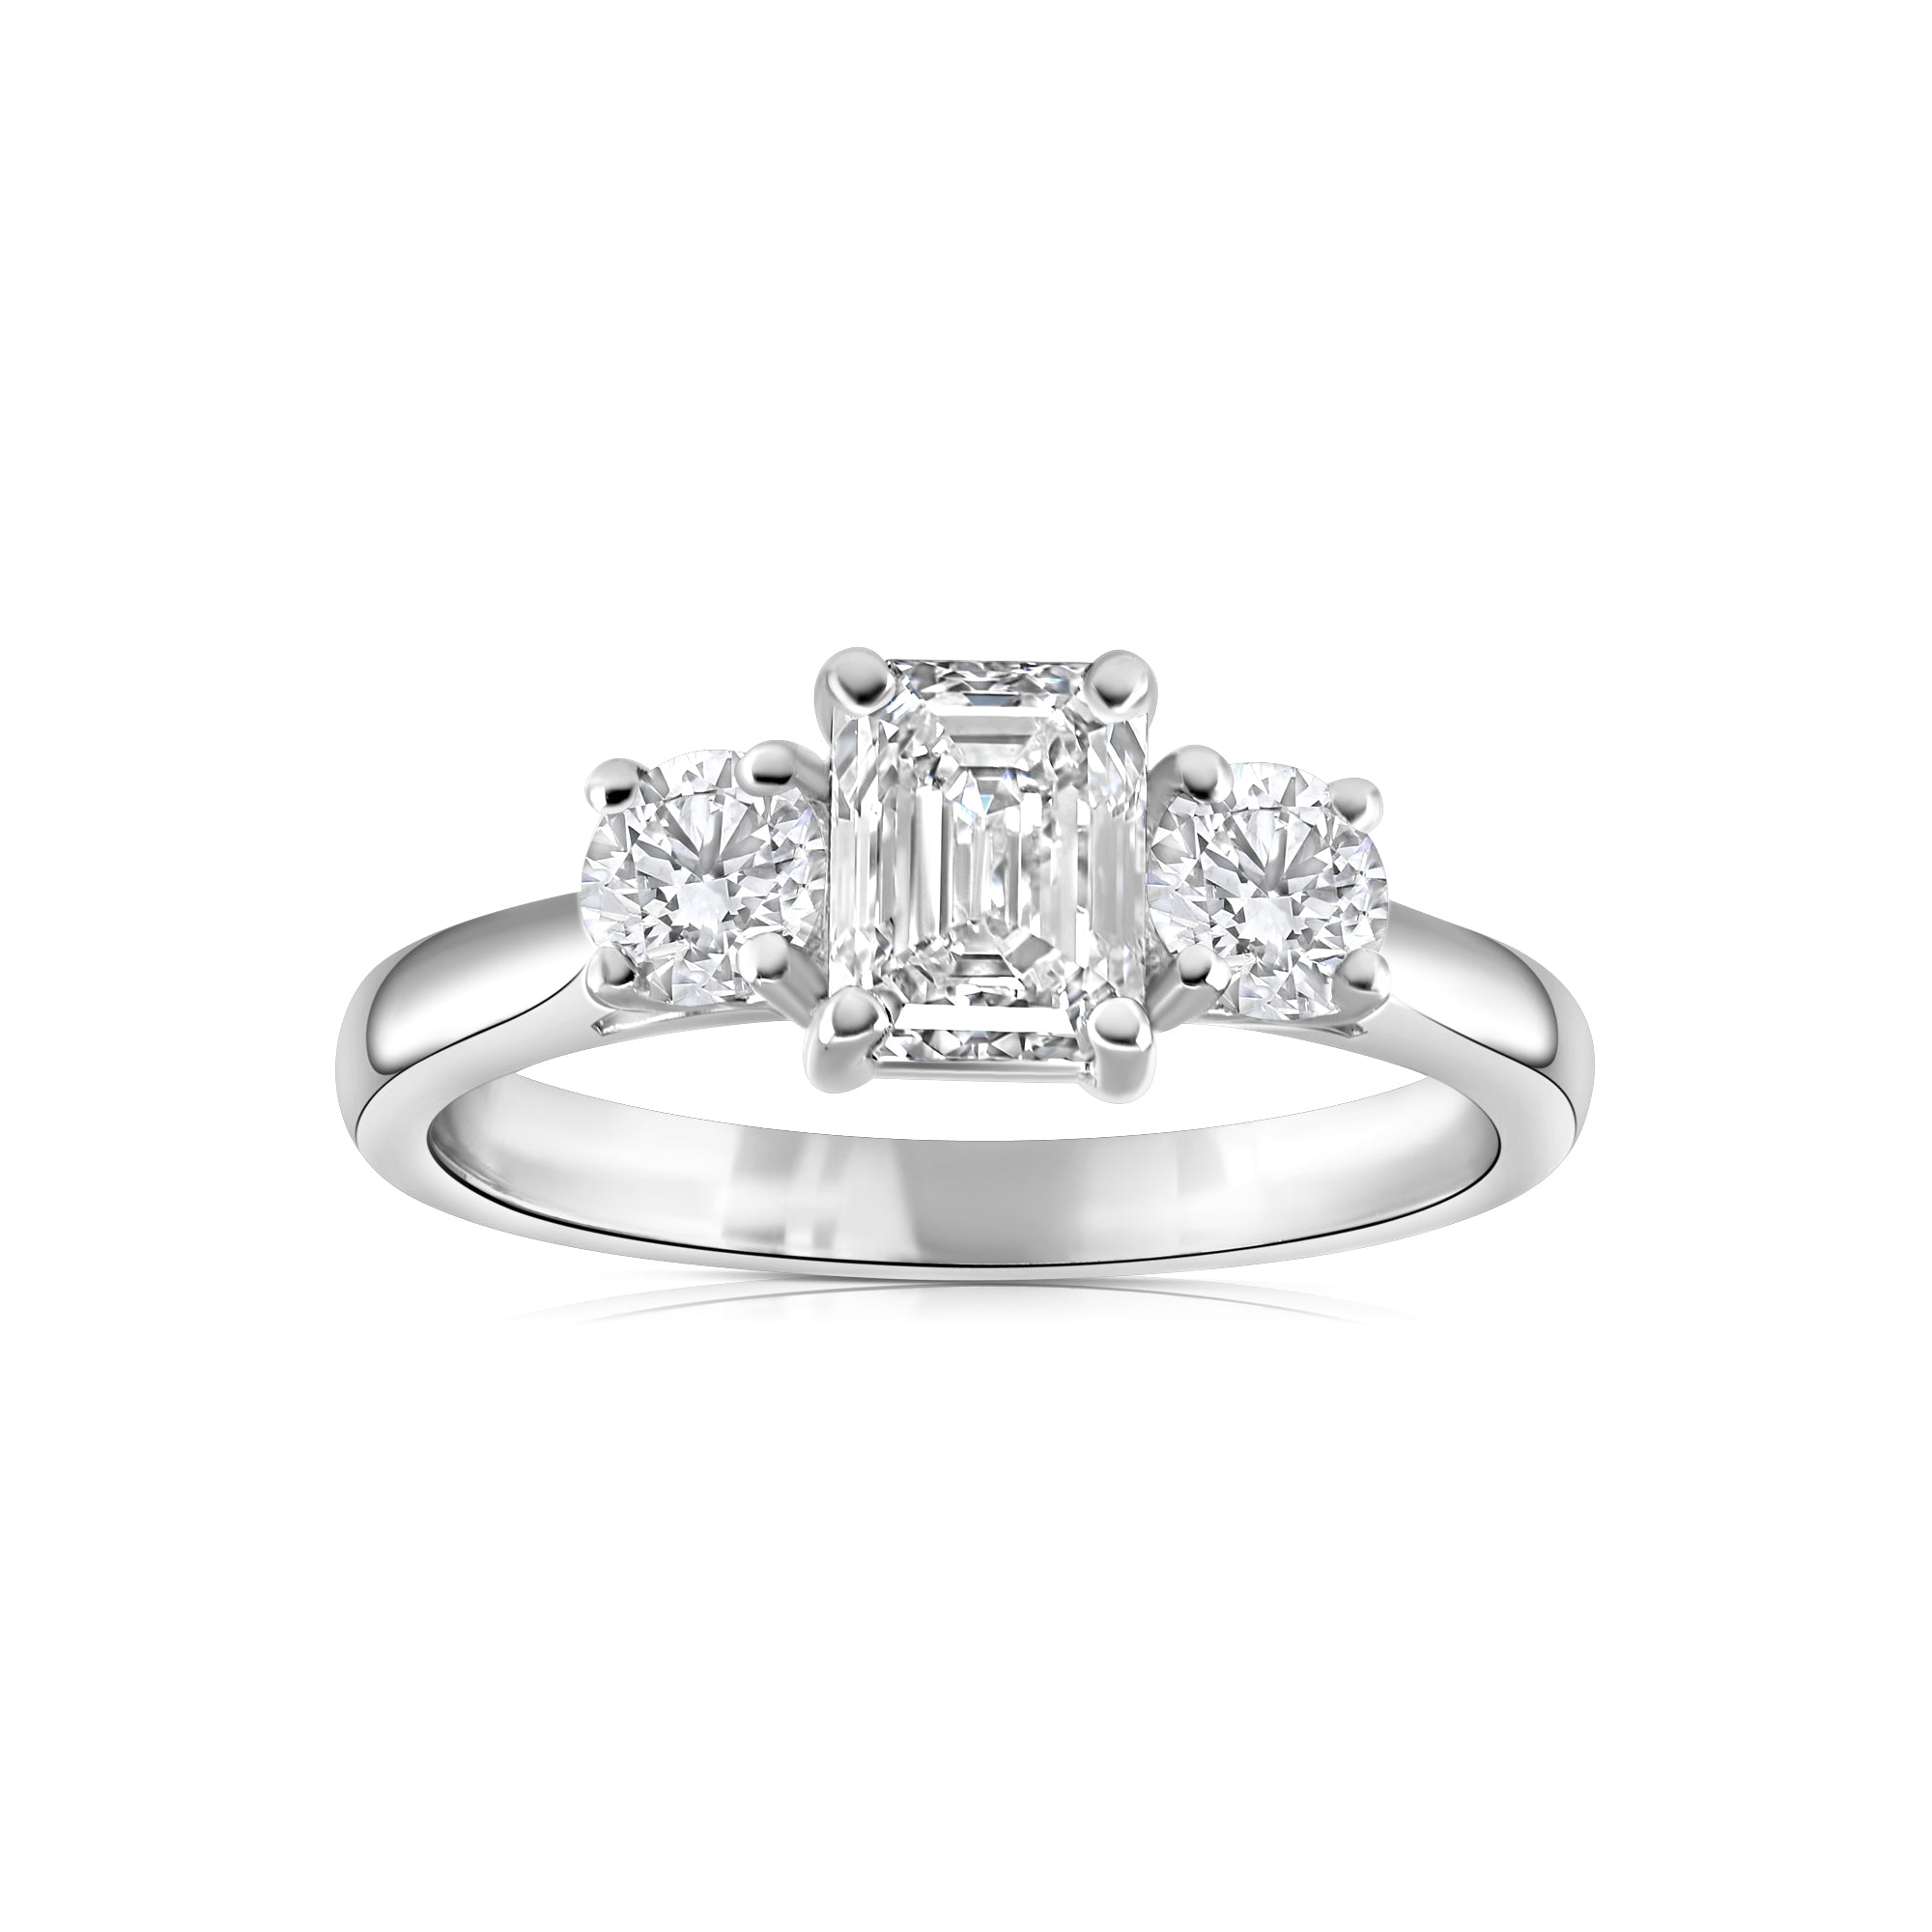 1.41ct emerald cut & round brilliant diamond trilogy engagement ring, platinum, F colour, VS1-2 clarity, GIA certified